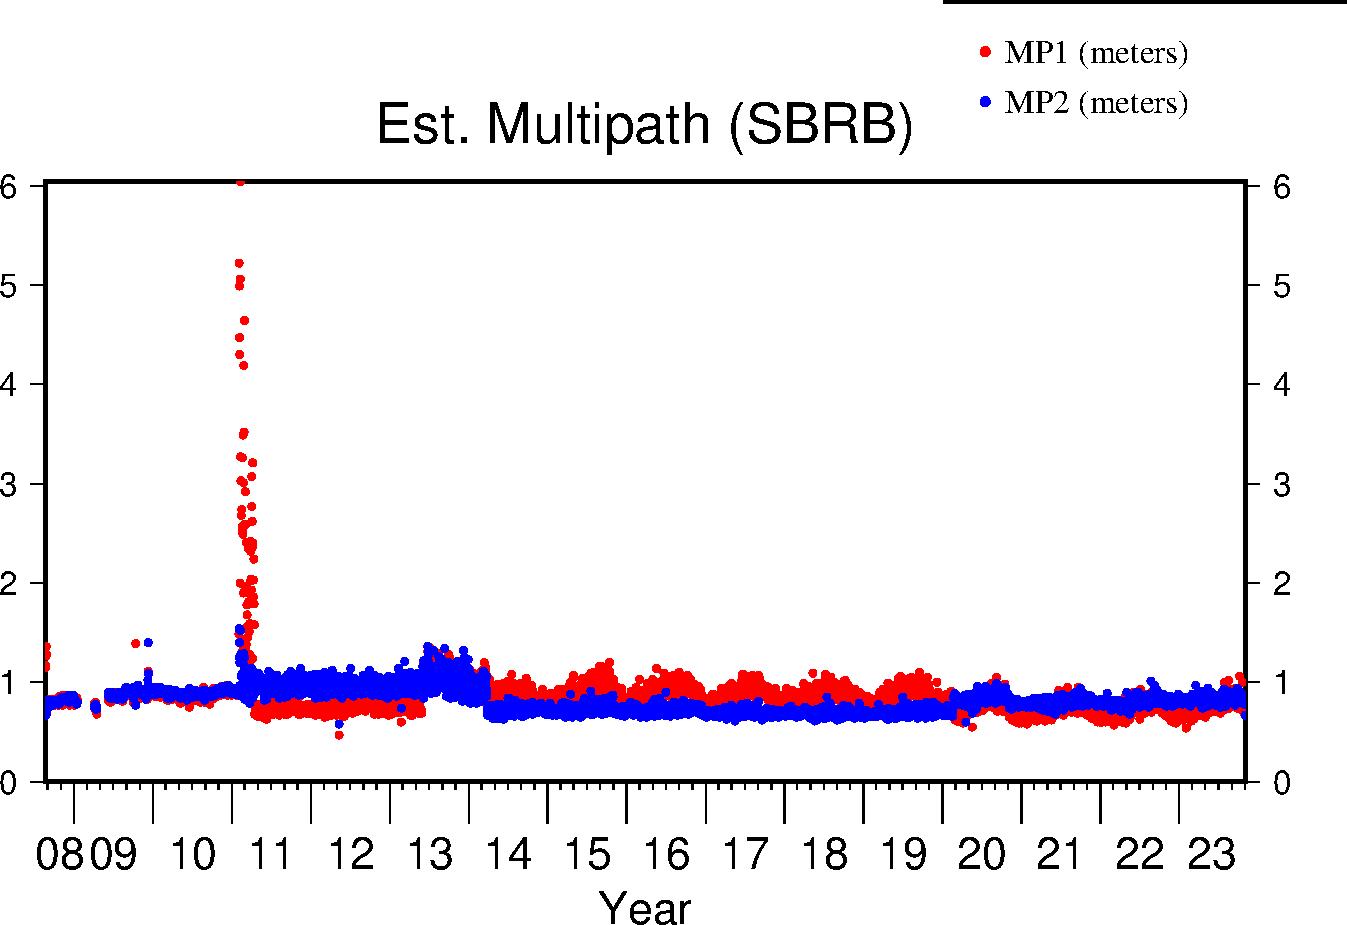 SBRB multipath lifetime